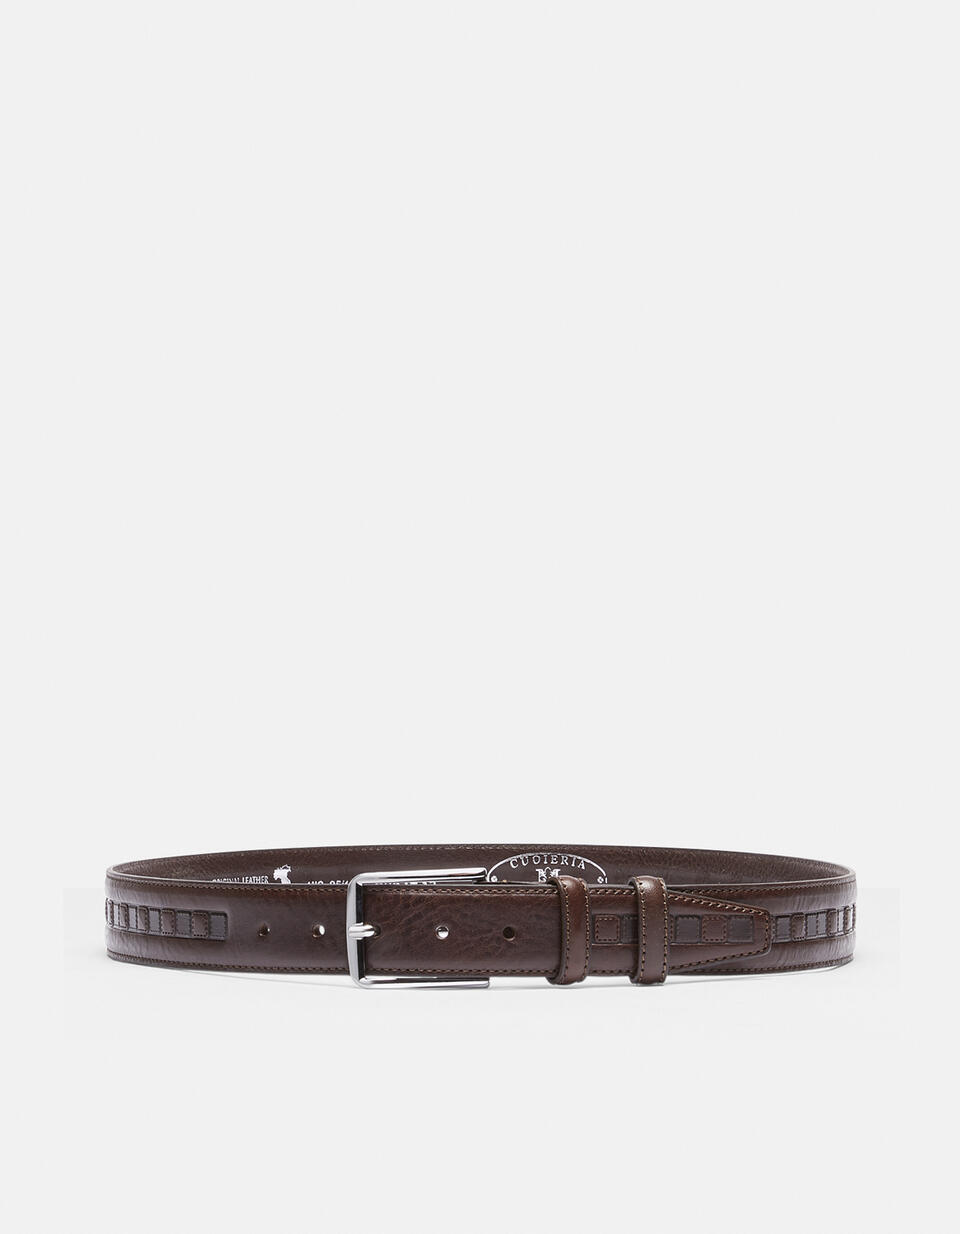 Belt leather working height 3.5 cm. - Men Belts | Belts TESTA DI MORO - Men Belts | BeltsCuoieria Fiorentina